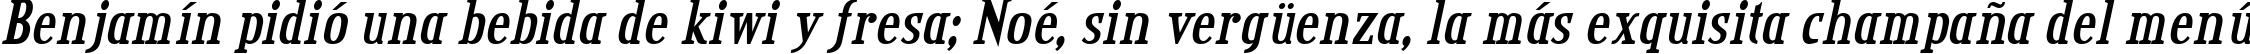 Пример написания шрифтом Credit Valley Bold Italic текста на испанском